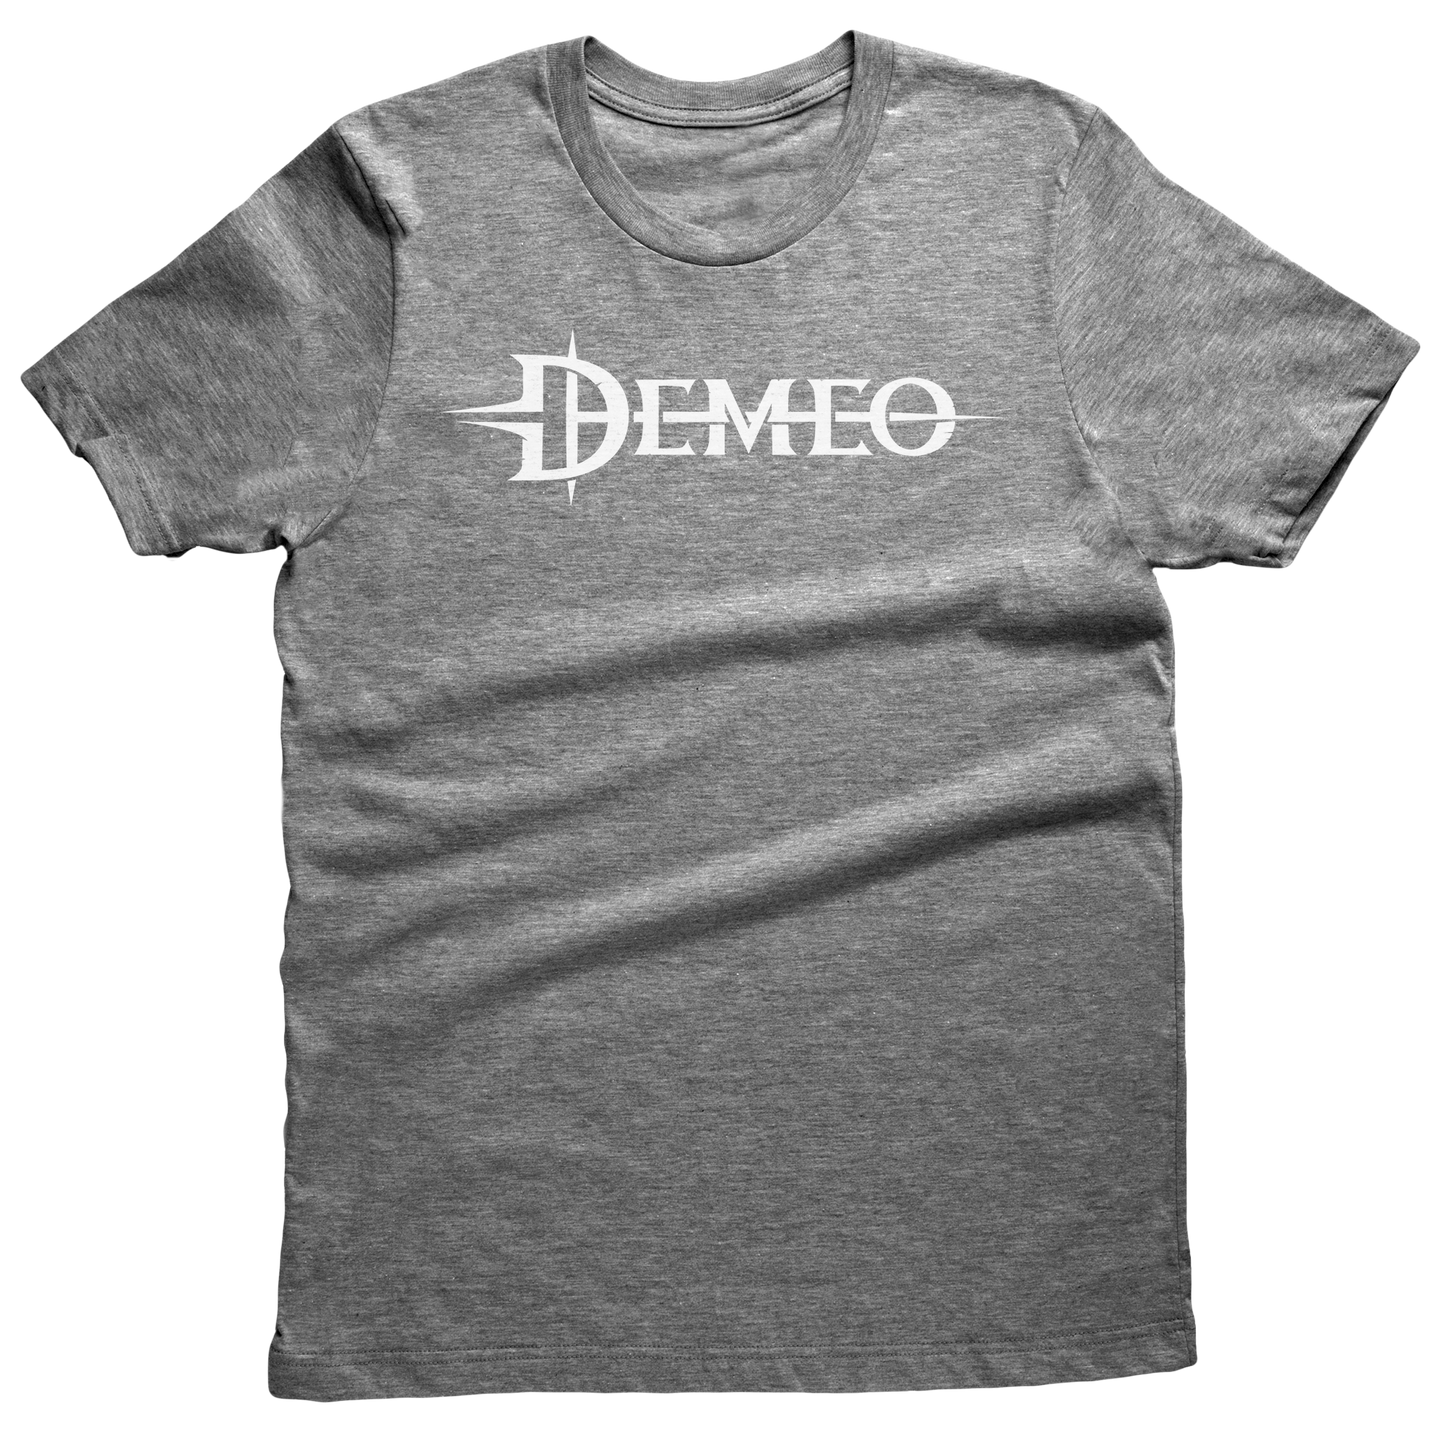 Demeo Logo Tee - White/Gray